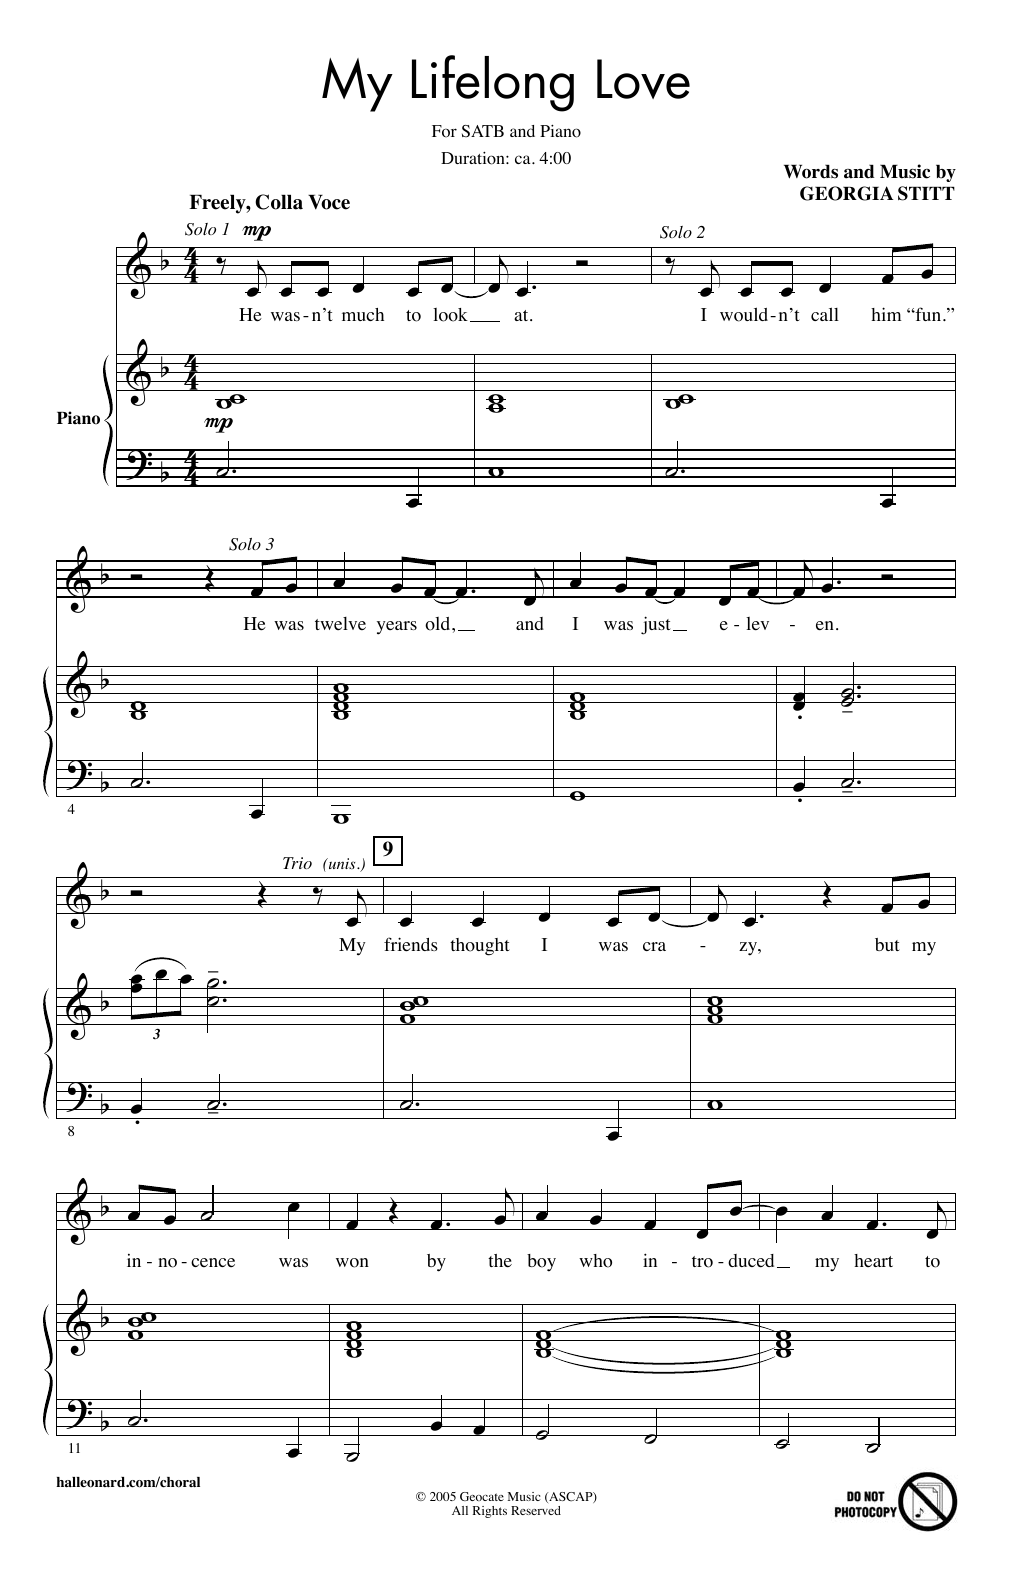 Georgia Stitt My Lifelong Love Sheet Music Notes & Chords for SATB - Download or Print PDF